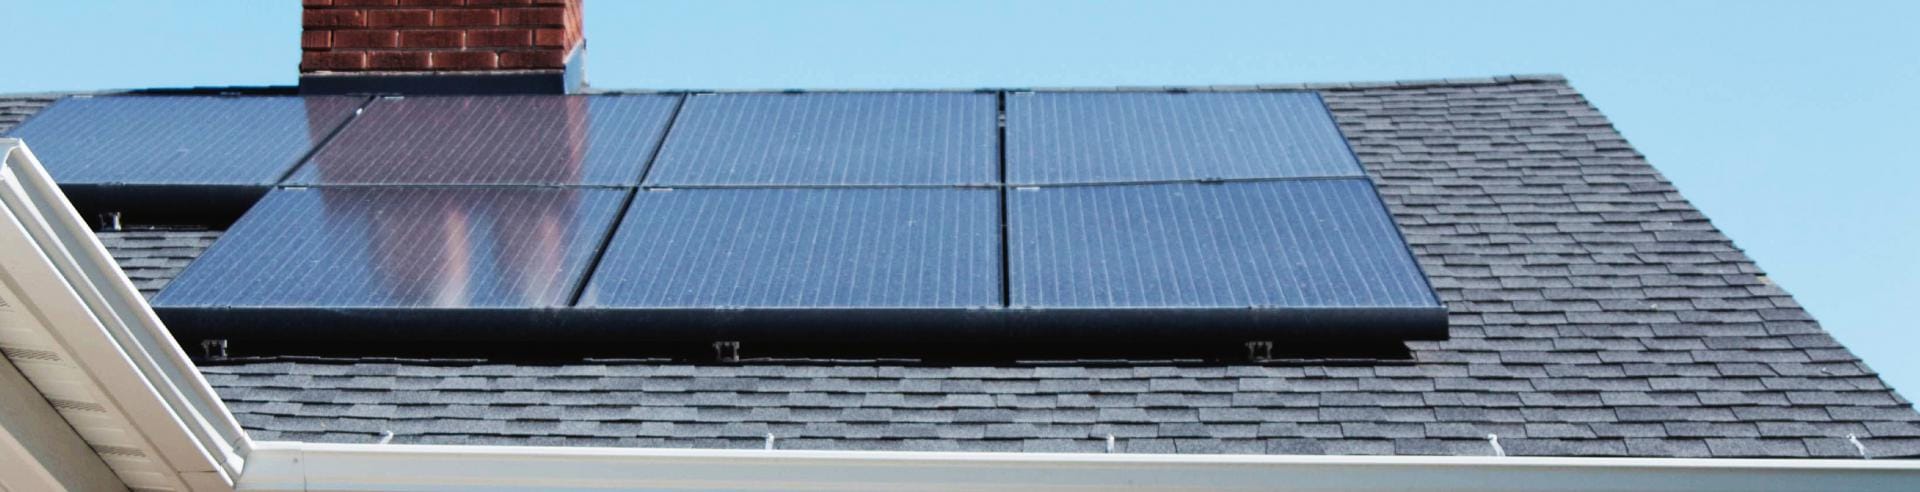 Solar Panels Housing 